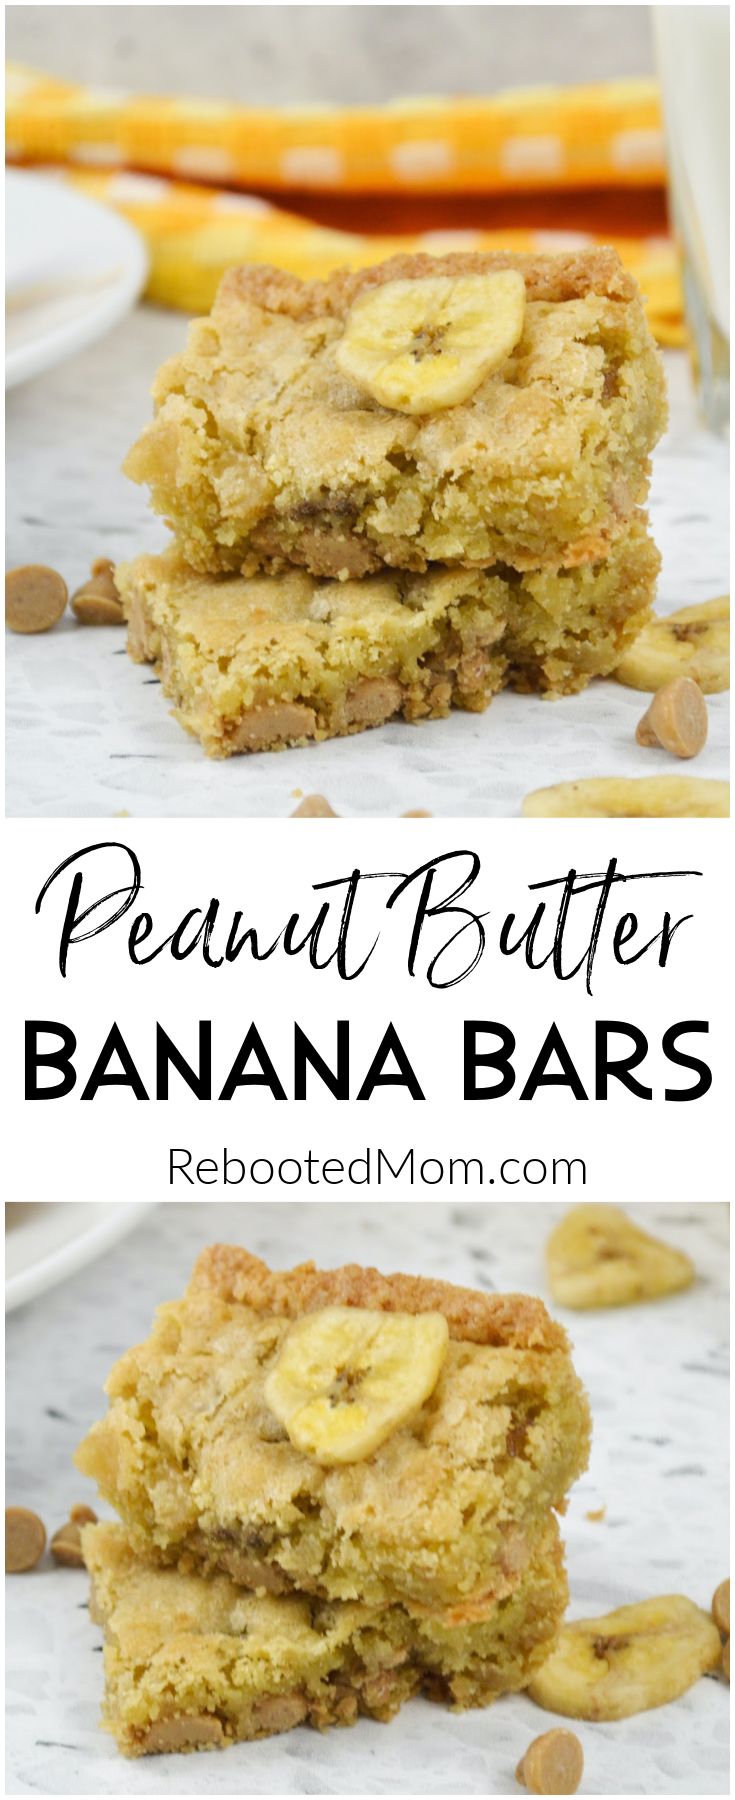 Peanut Butter Banana Bars